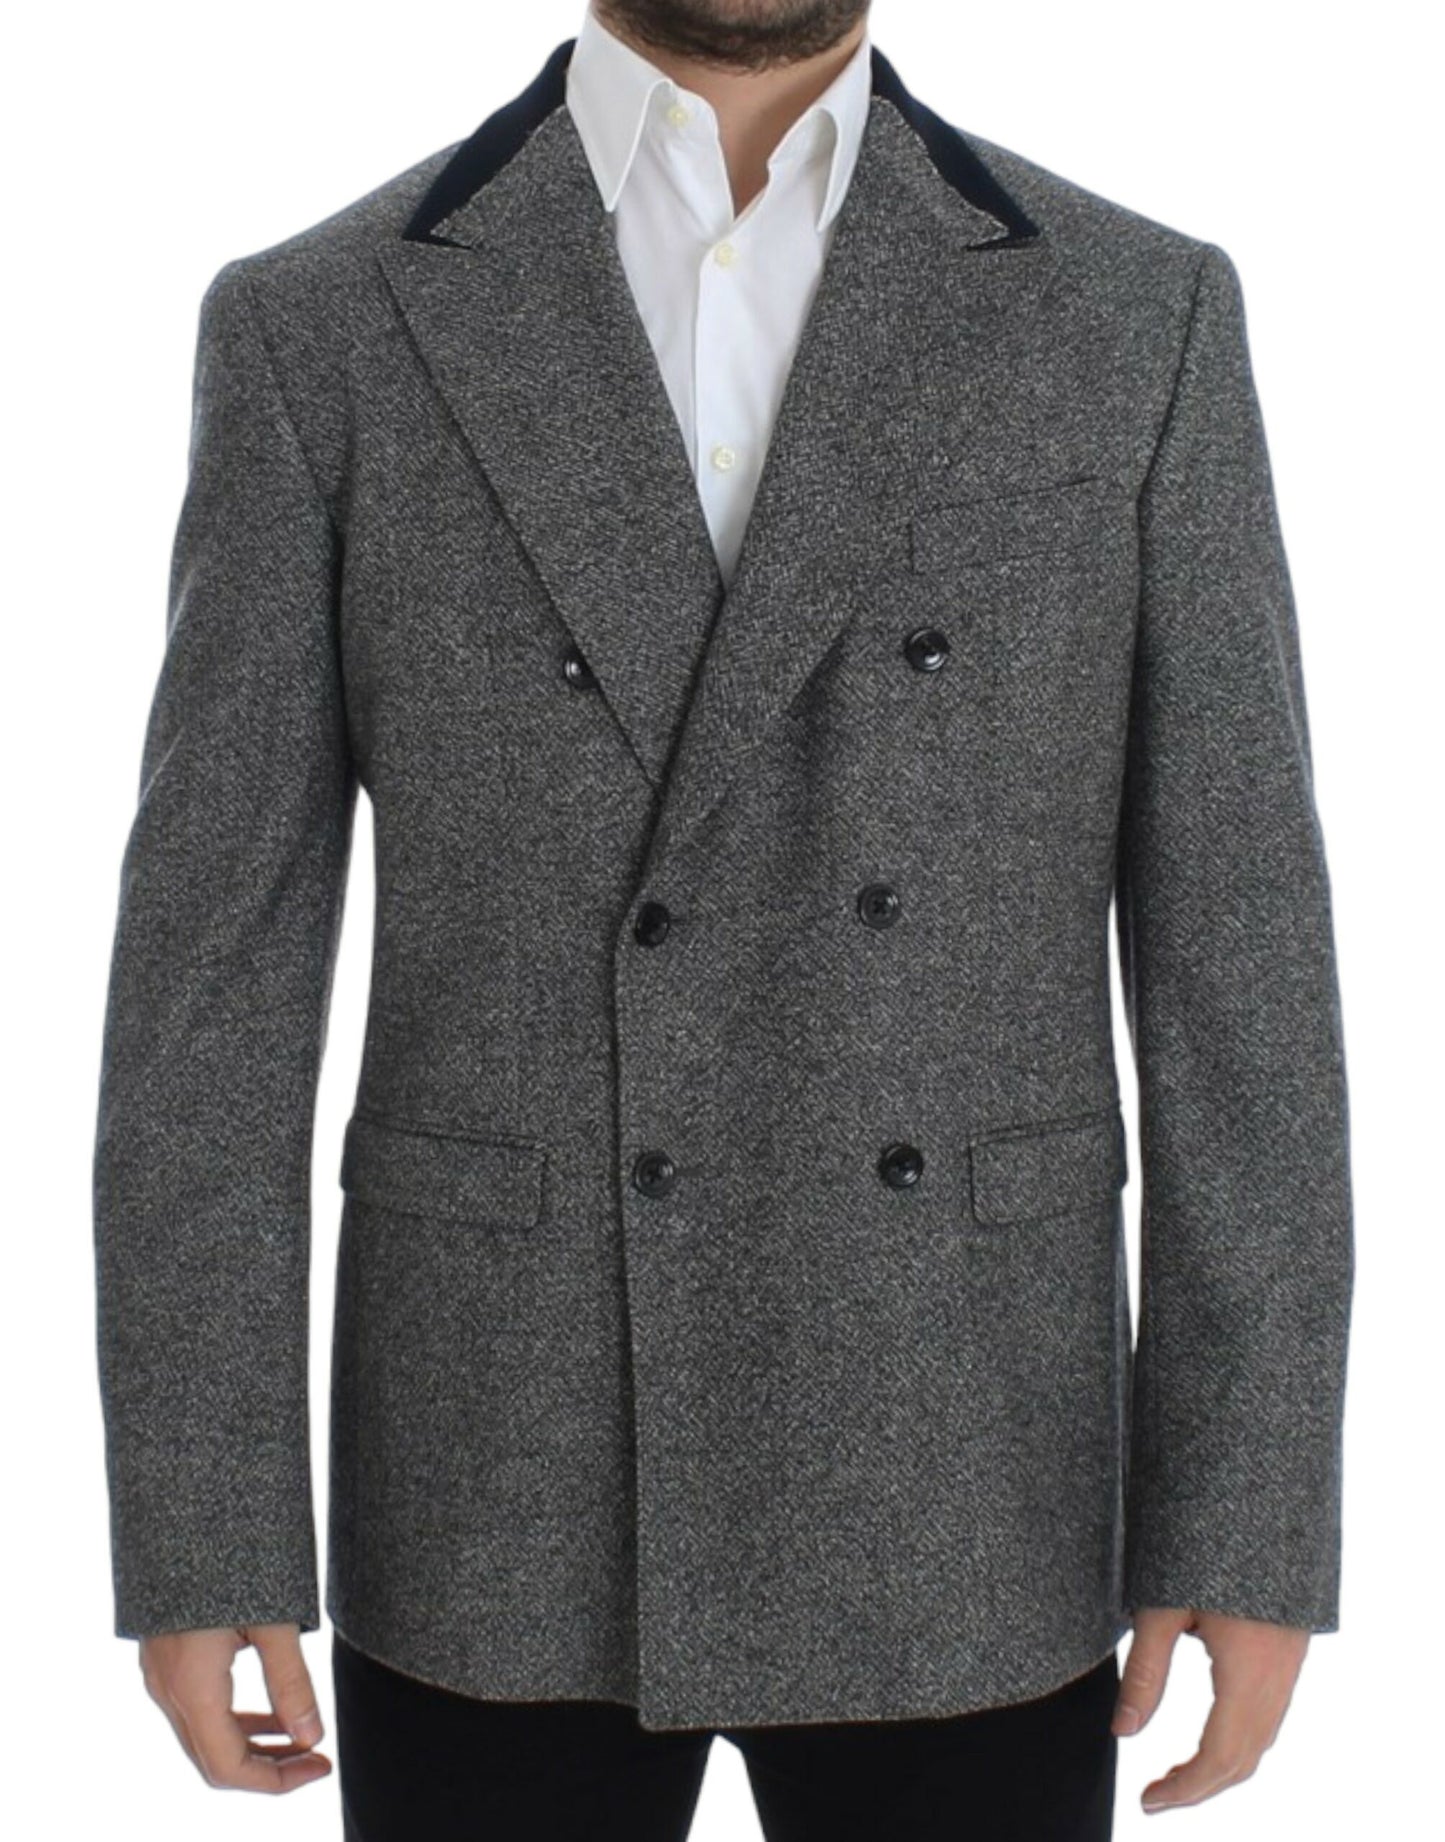 Elegant Gray Wool Slim Fit Blazer Jacket